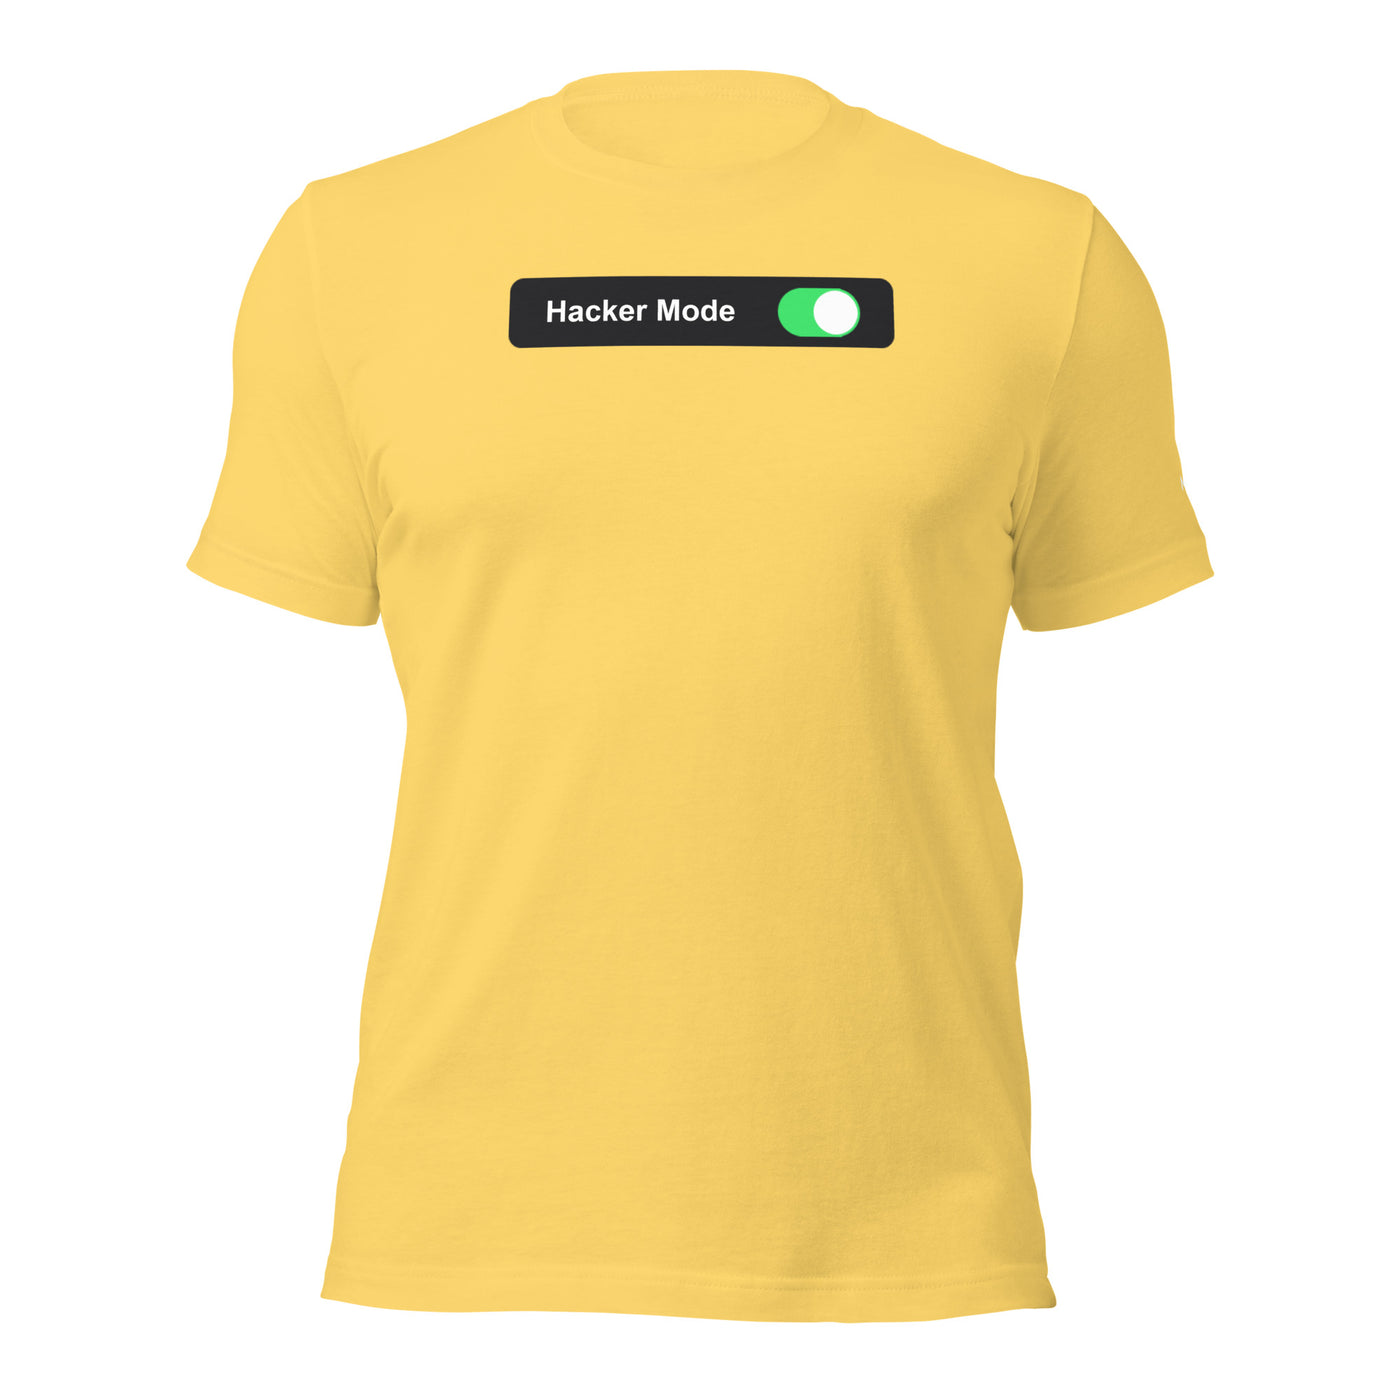 Hacker Mode On - Unisex t-shirt